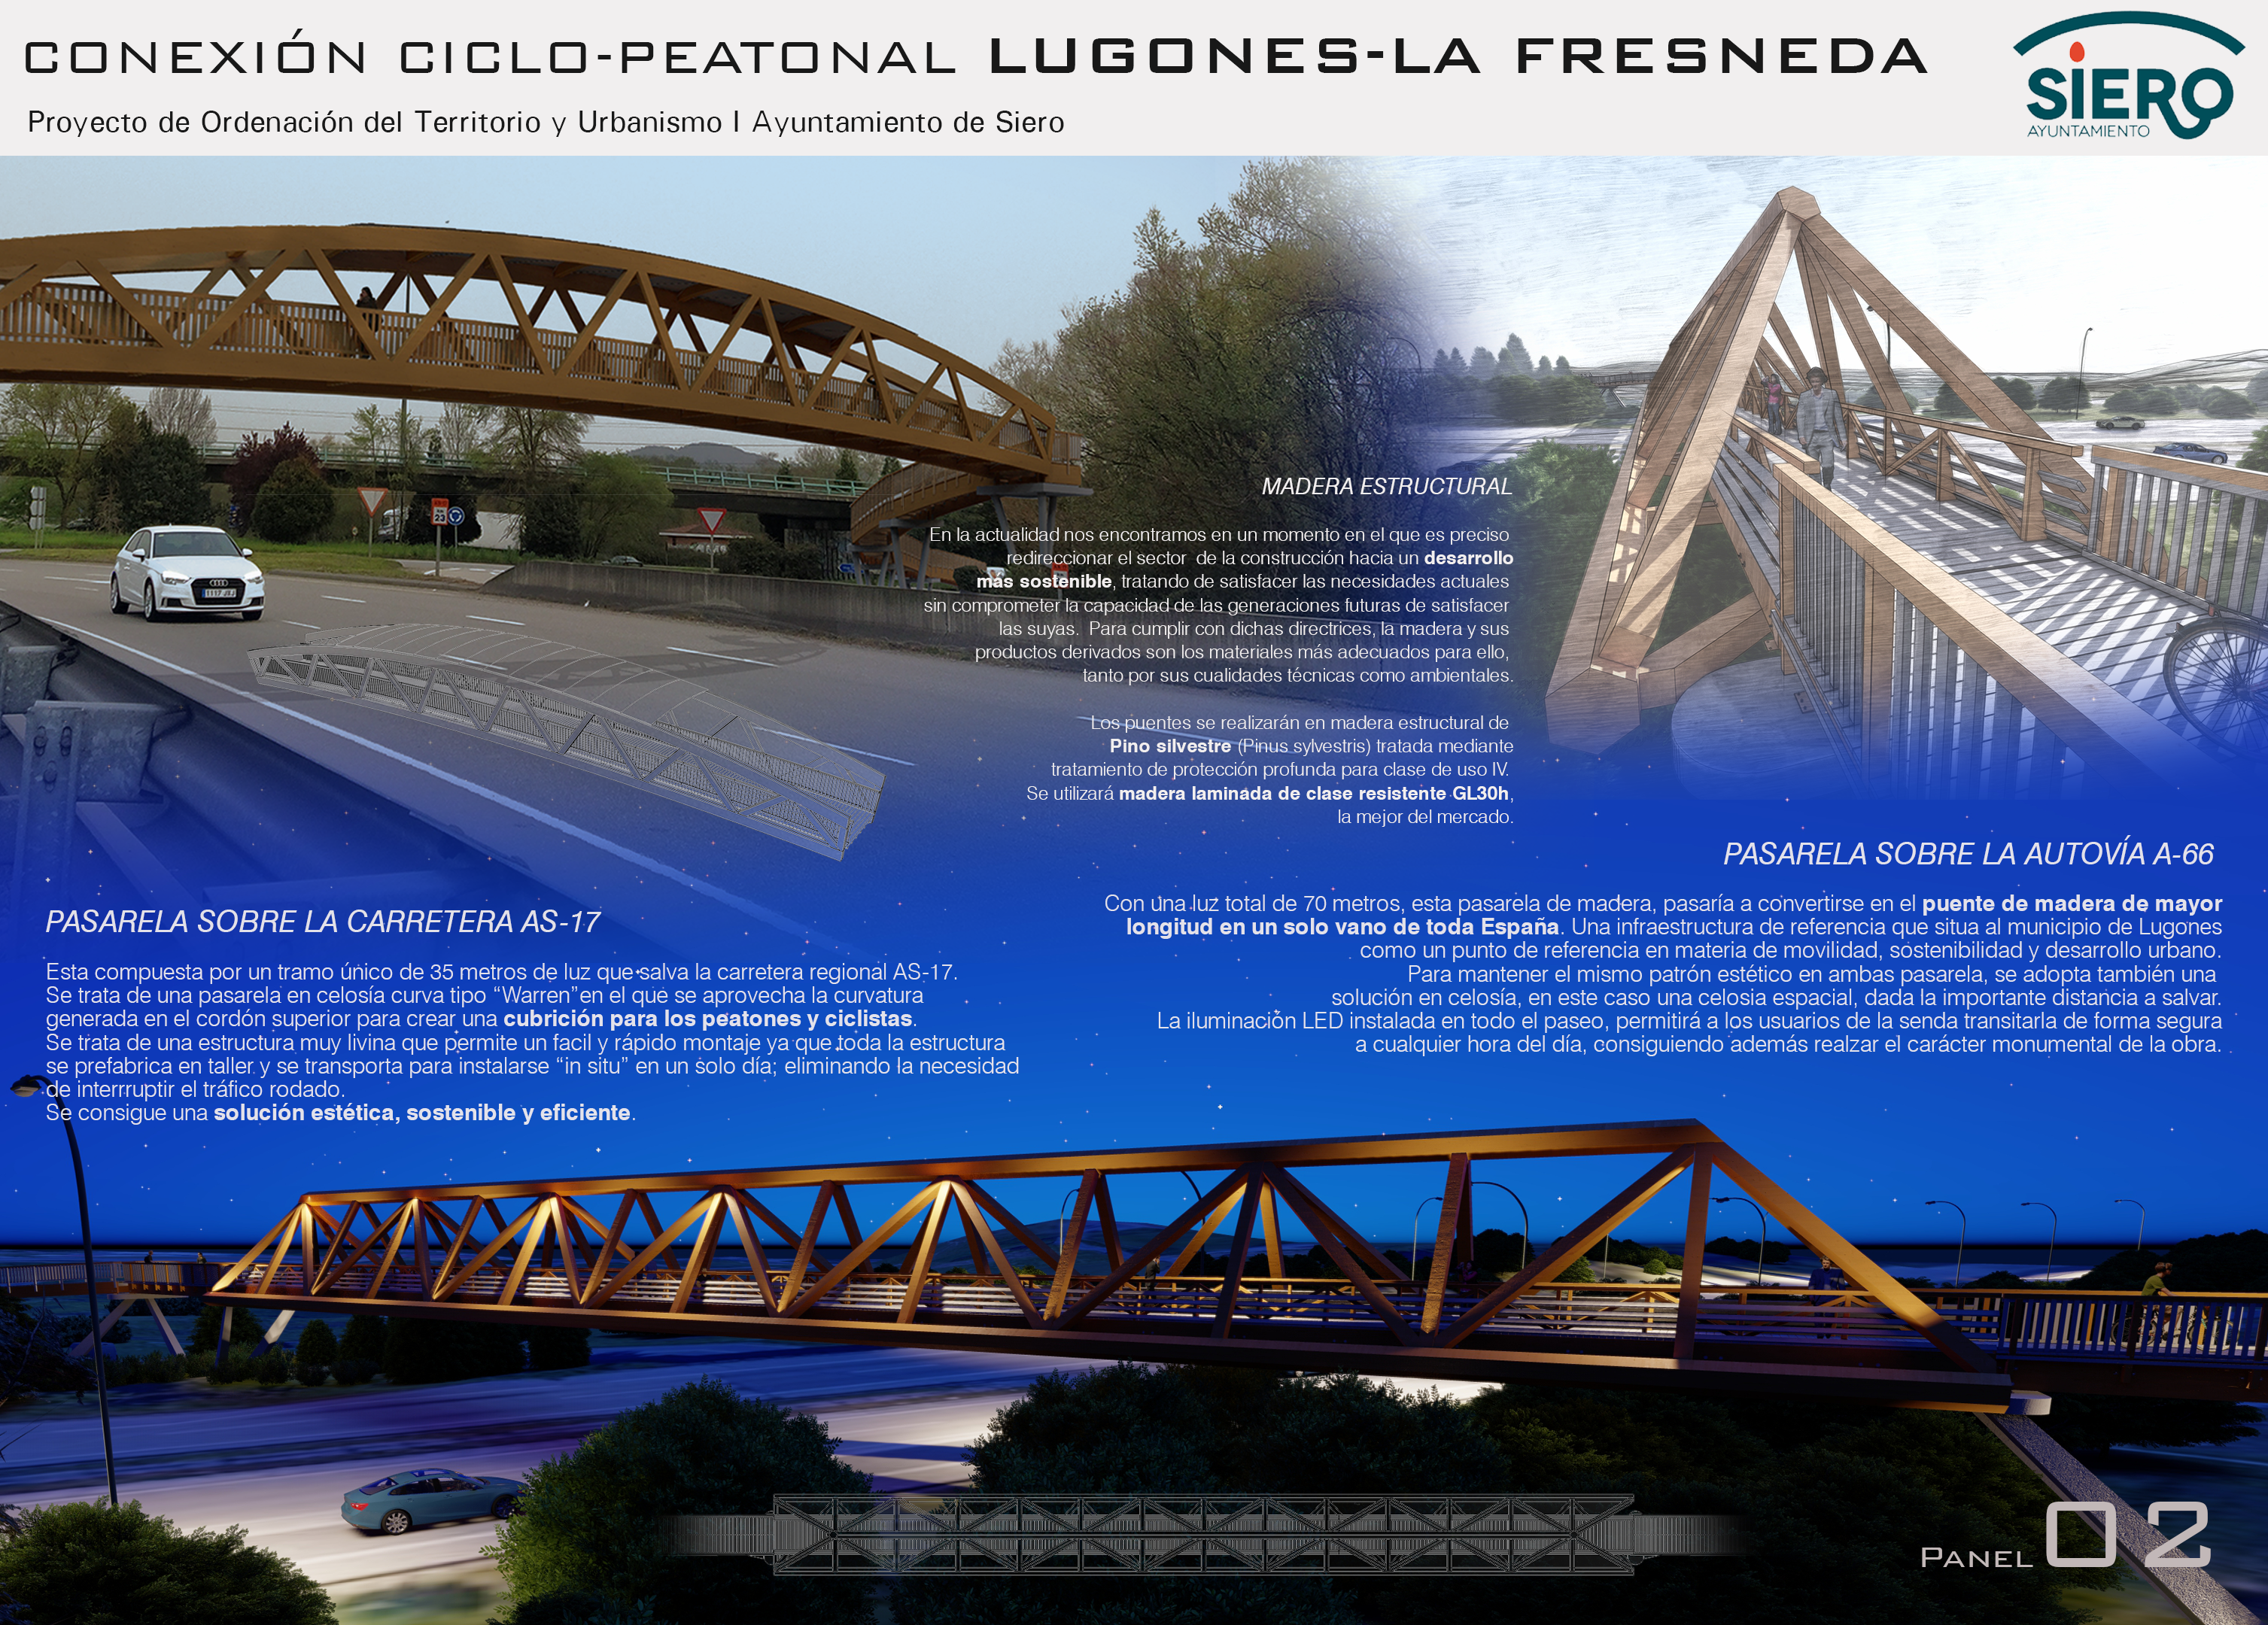 00_Panel 2 Senda Ciclo-peatonal Lugones-Fresneda